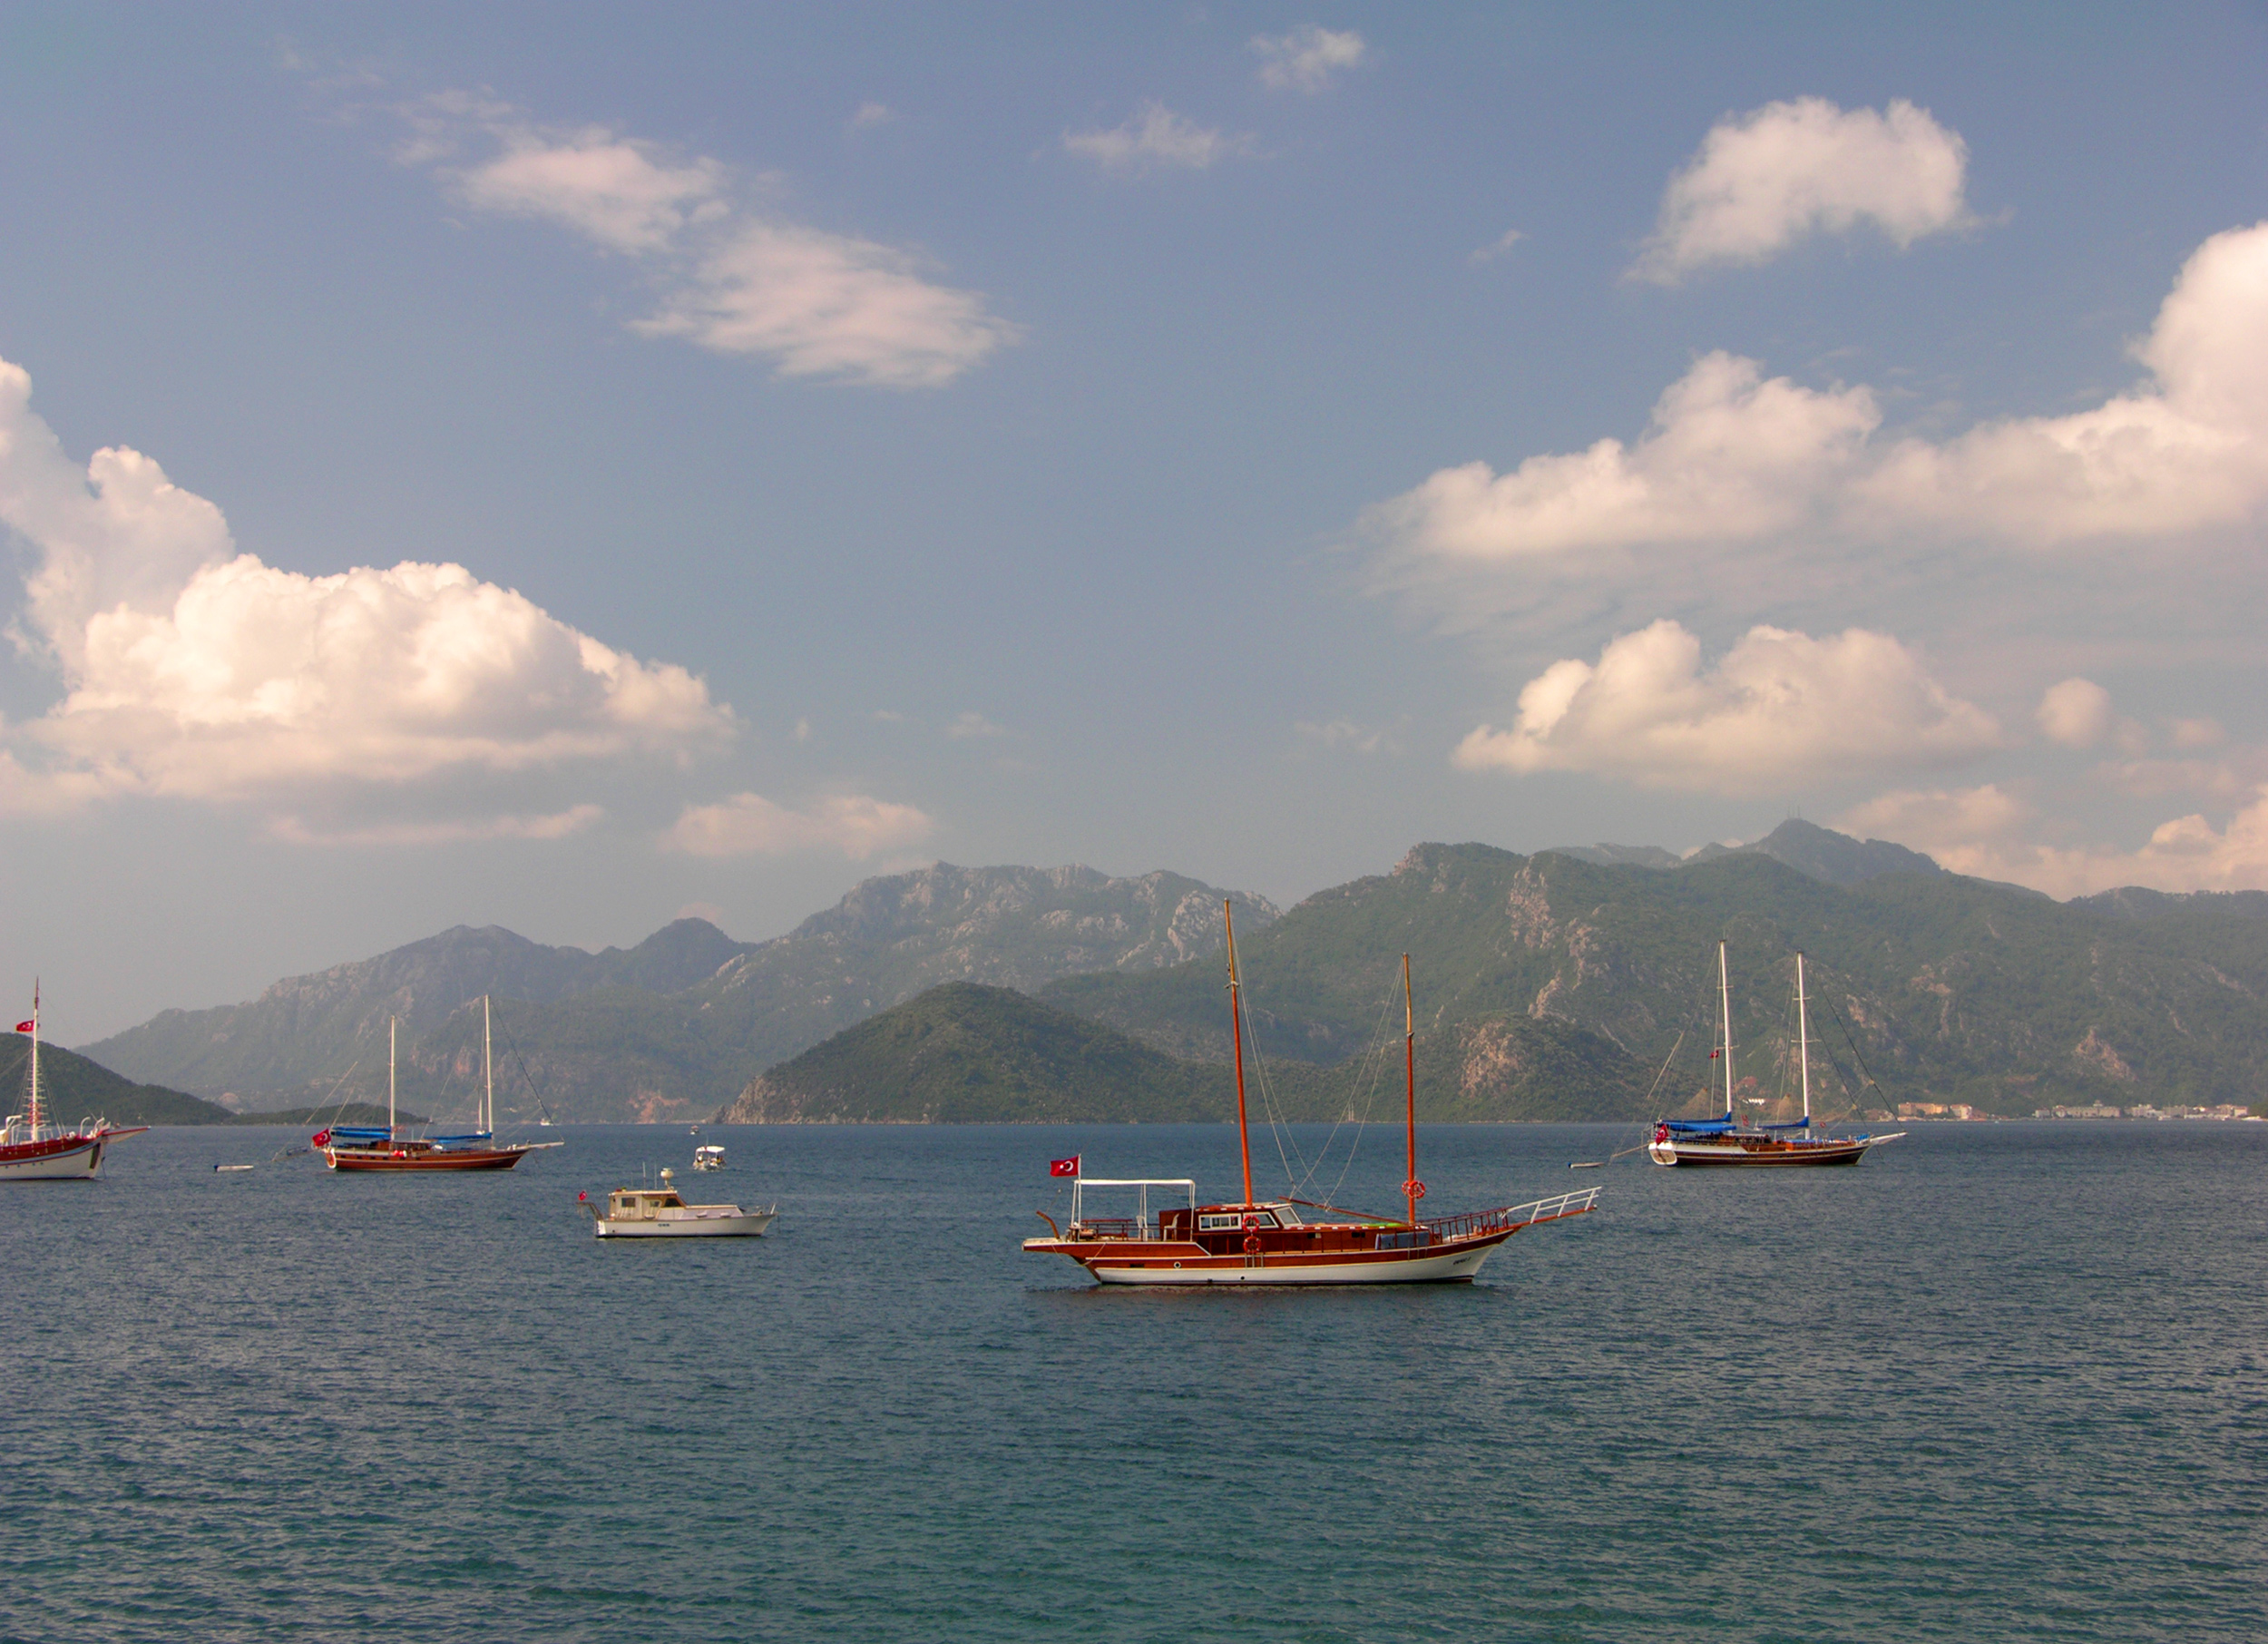 Tourist sailboats in Turkey